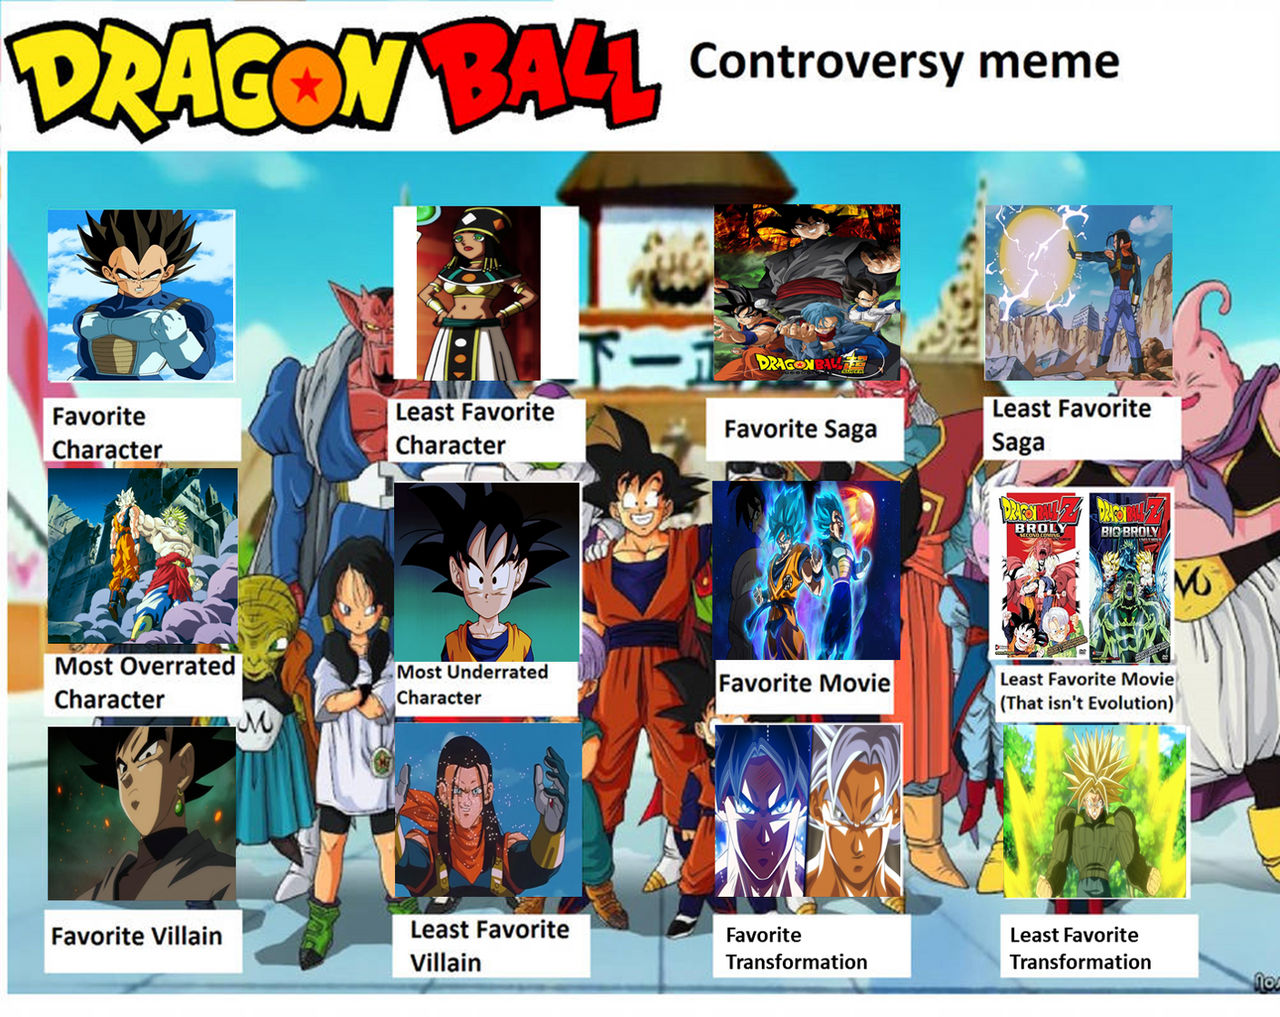 Dragon Ball Controversy Meme Version 3 by Paleomario66 on DeviantArt